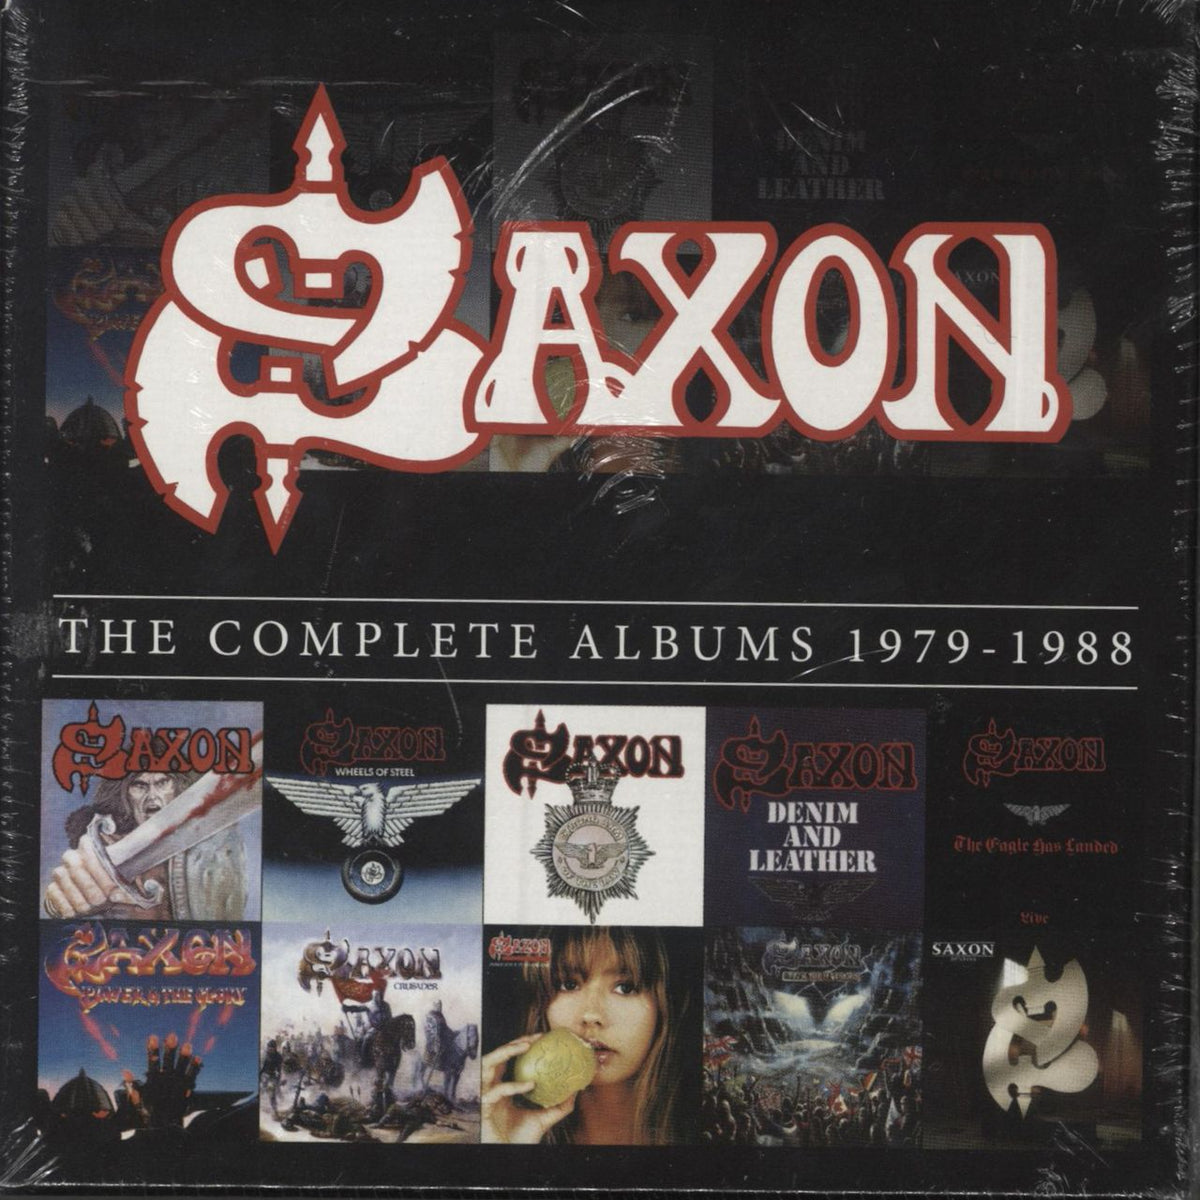 Saxon The Complete Albums 1979-1988 - Sealed UK Cd album box 